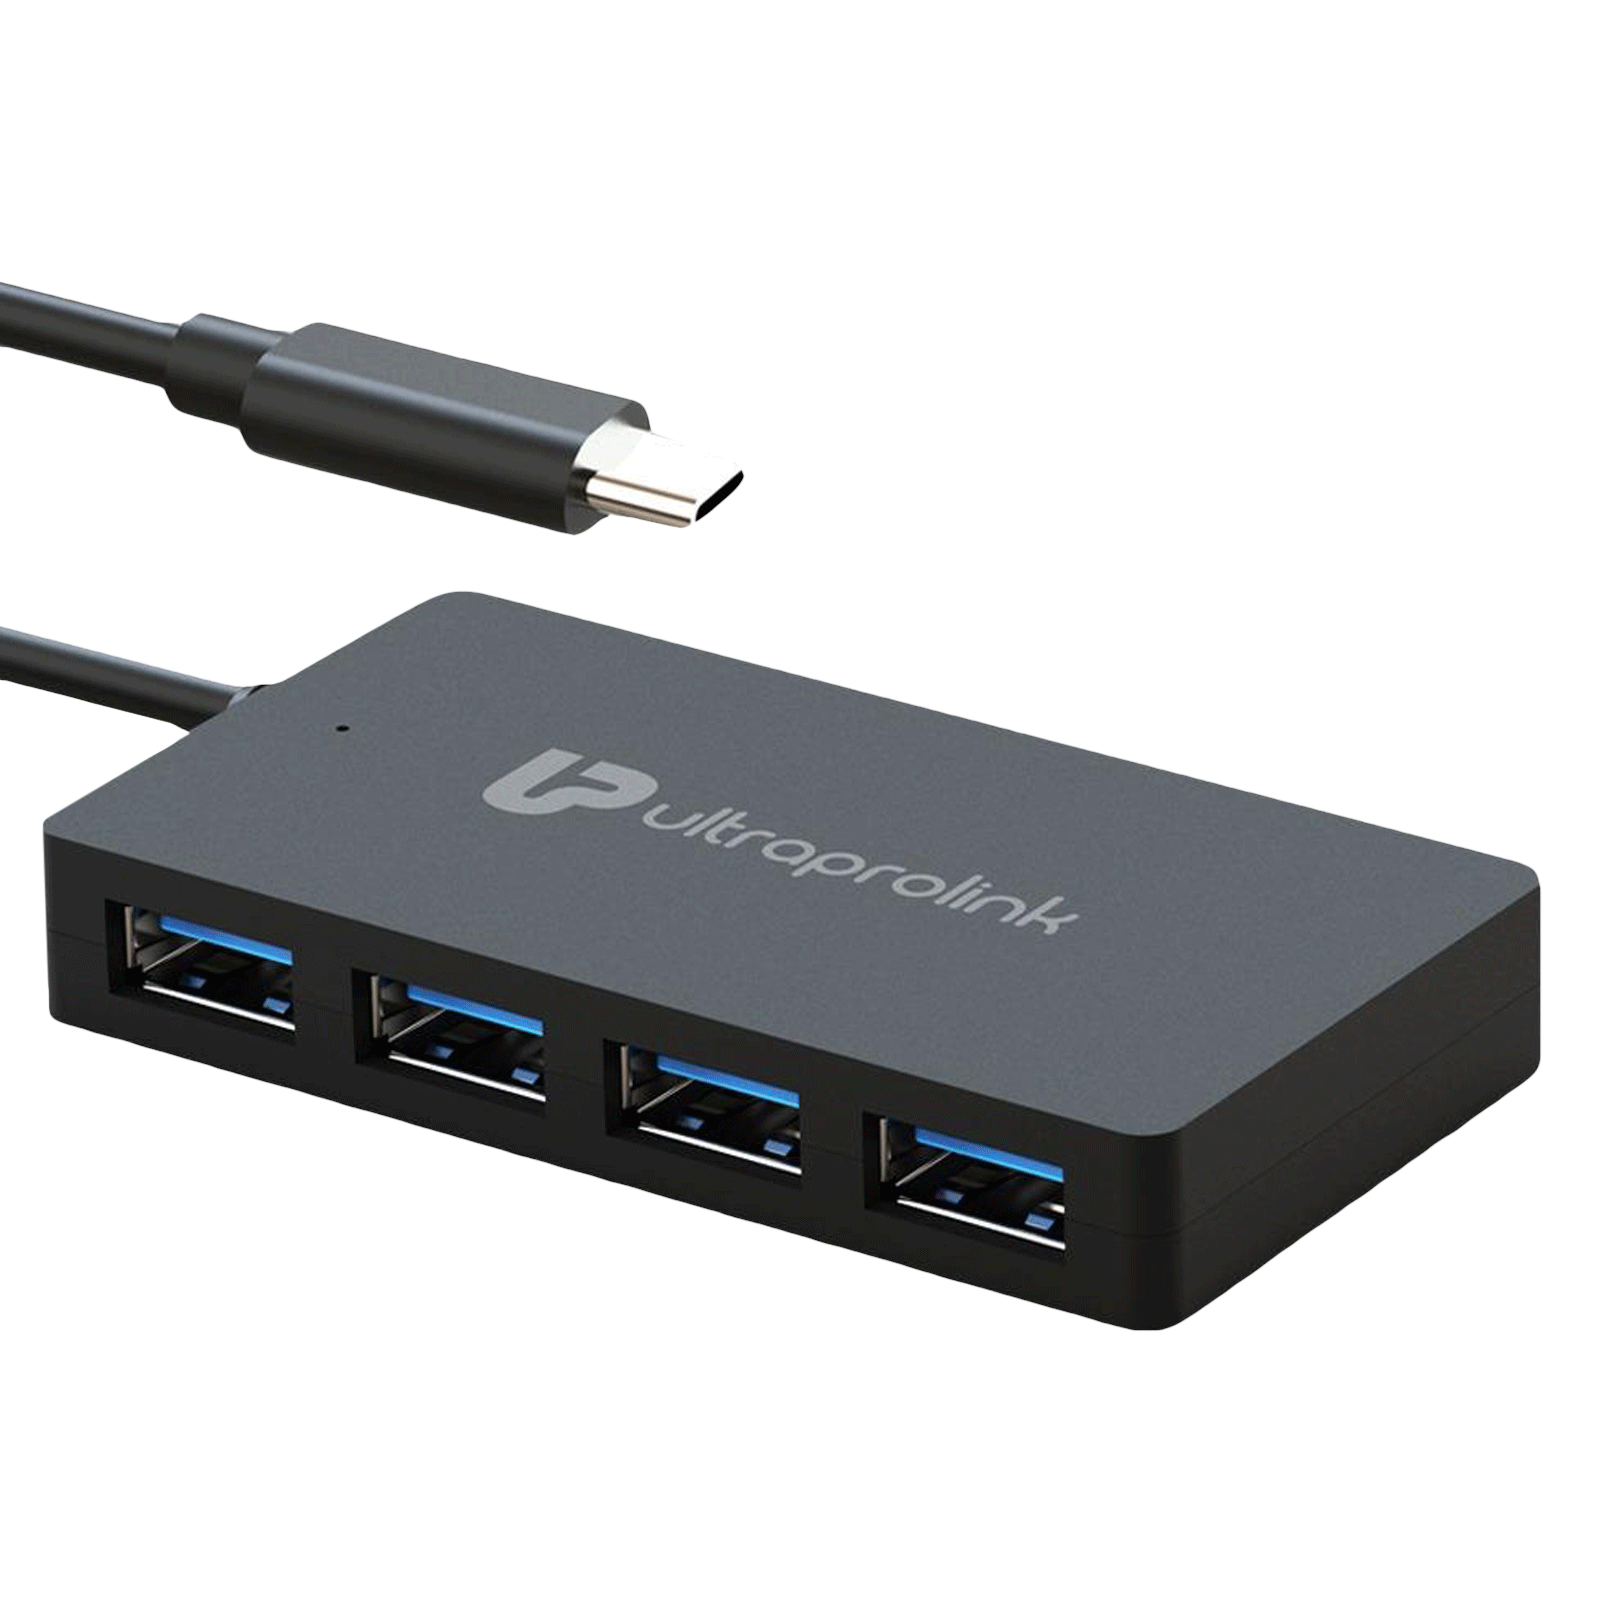 UltraProlink iExpand USB 3.1 Type C to USB 3.0 Type A USB Hub (High Speed Transfer Data, Black)